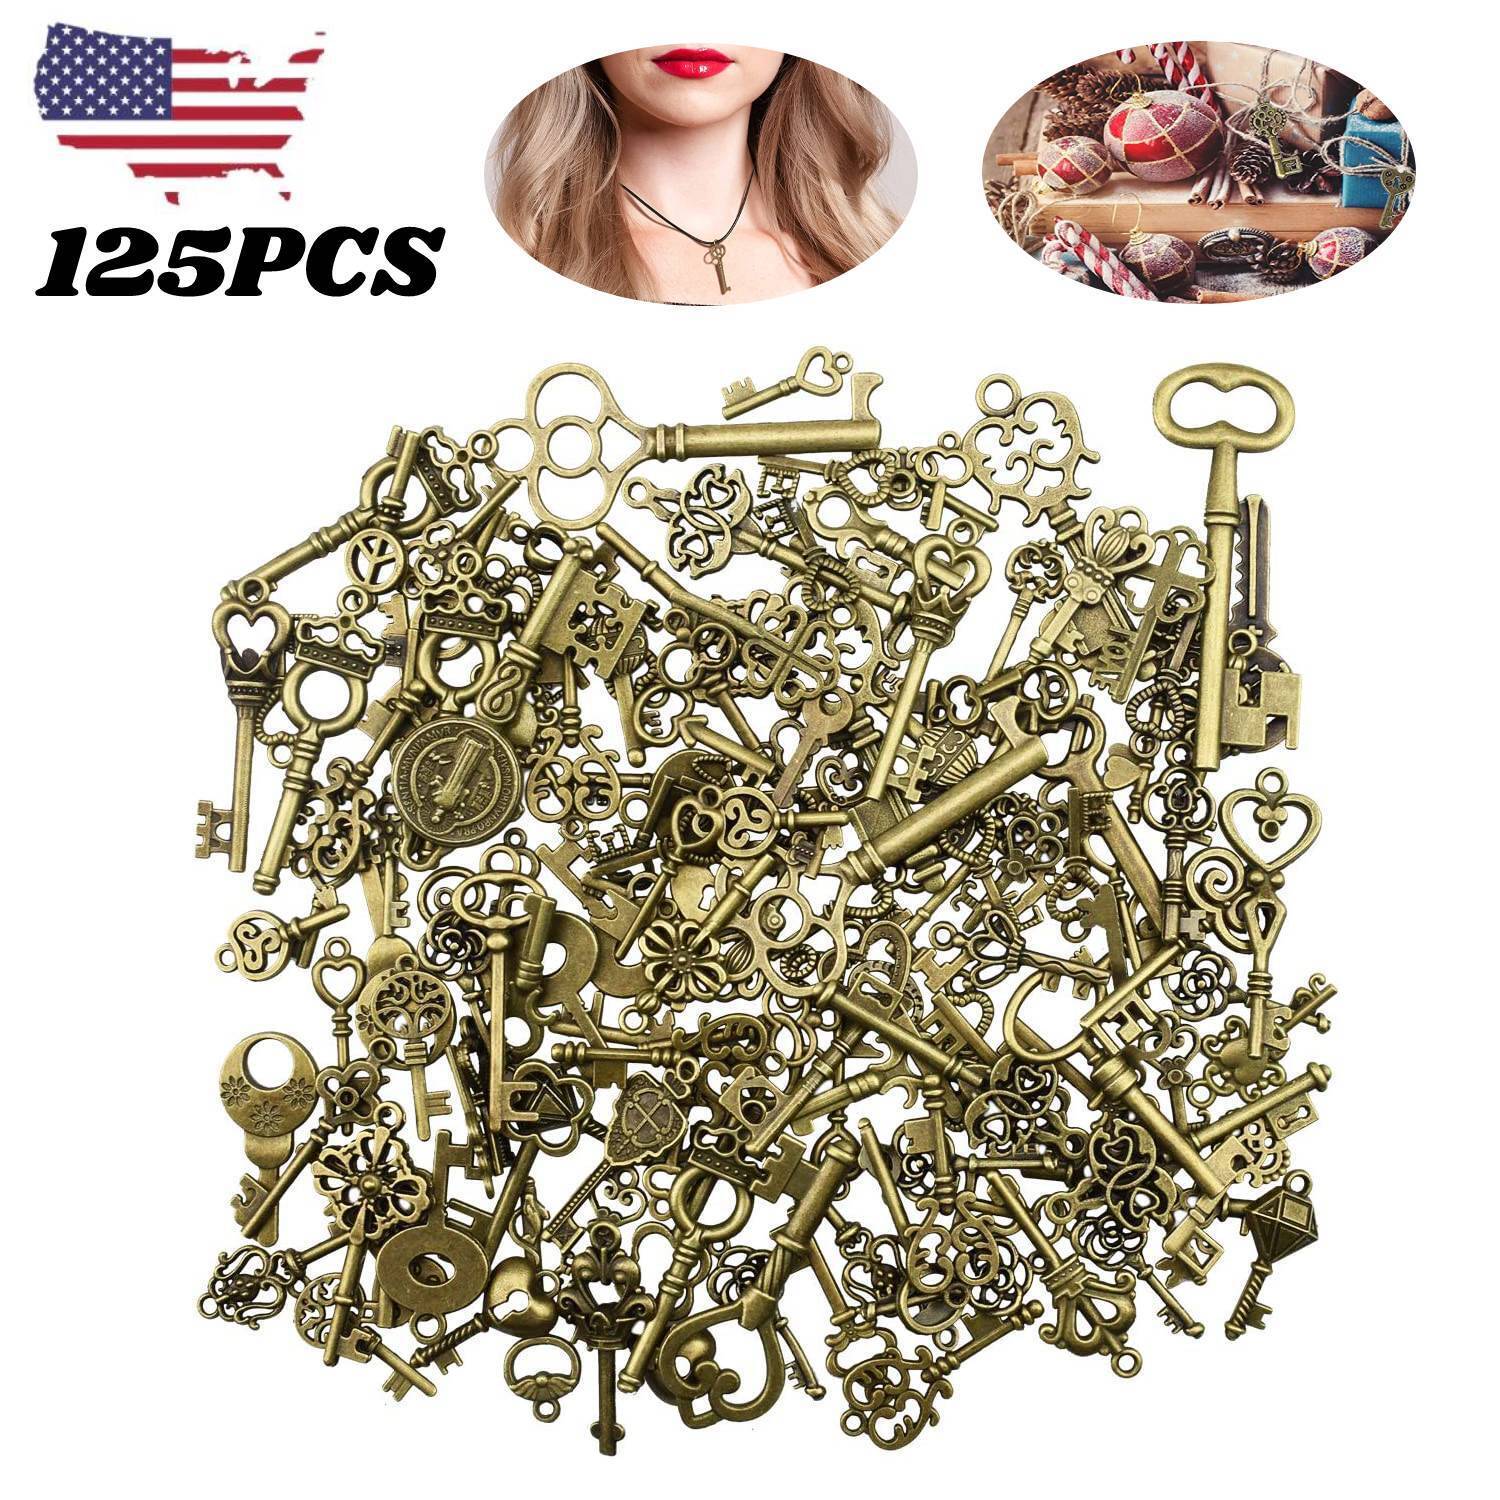 125 Packs Antique Vintage Decorative Skeleton Key Fancy Heart Bow Pendants USA